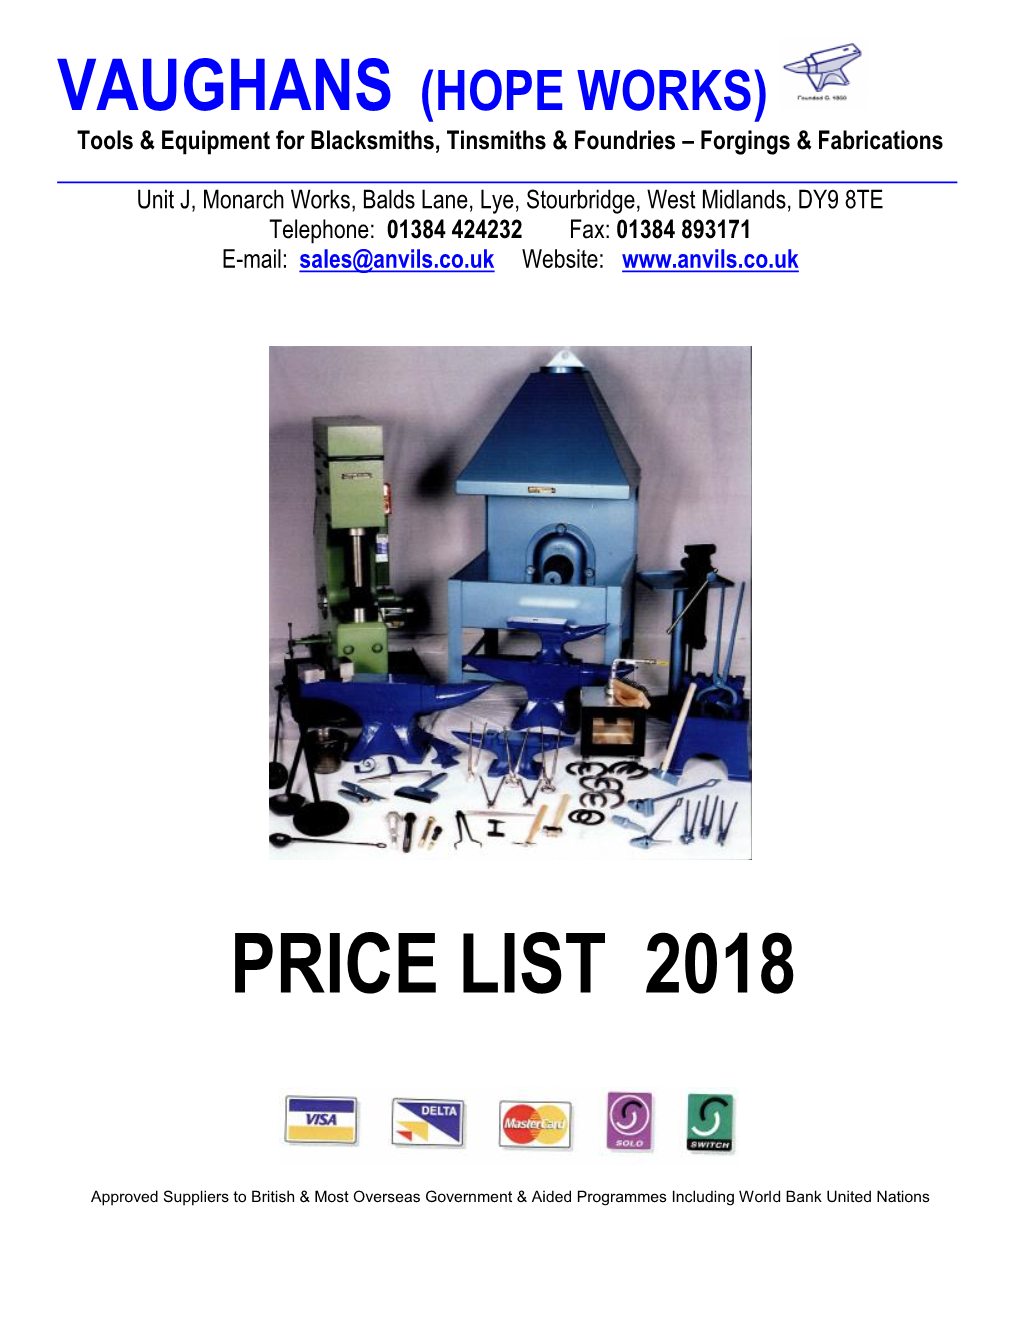 Price List 2018